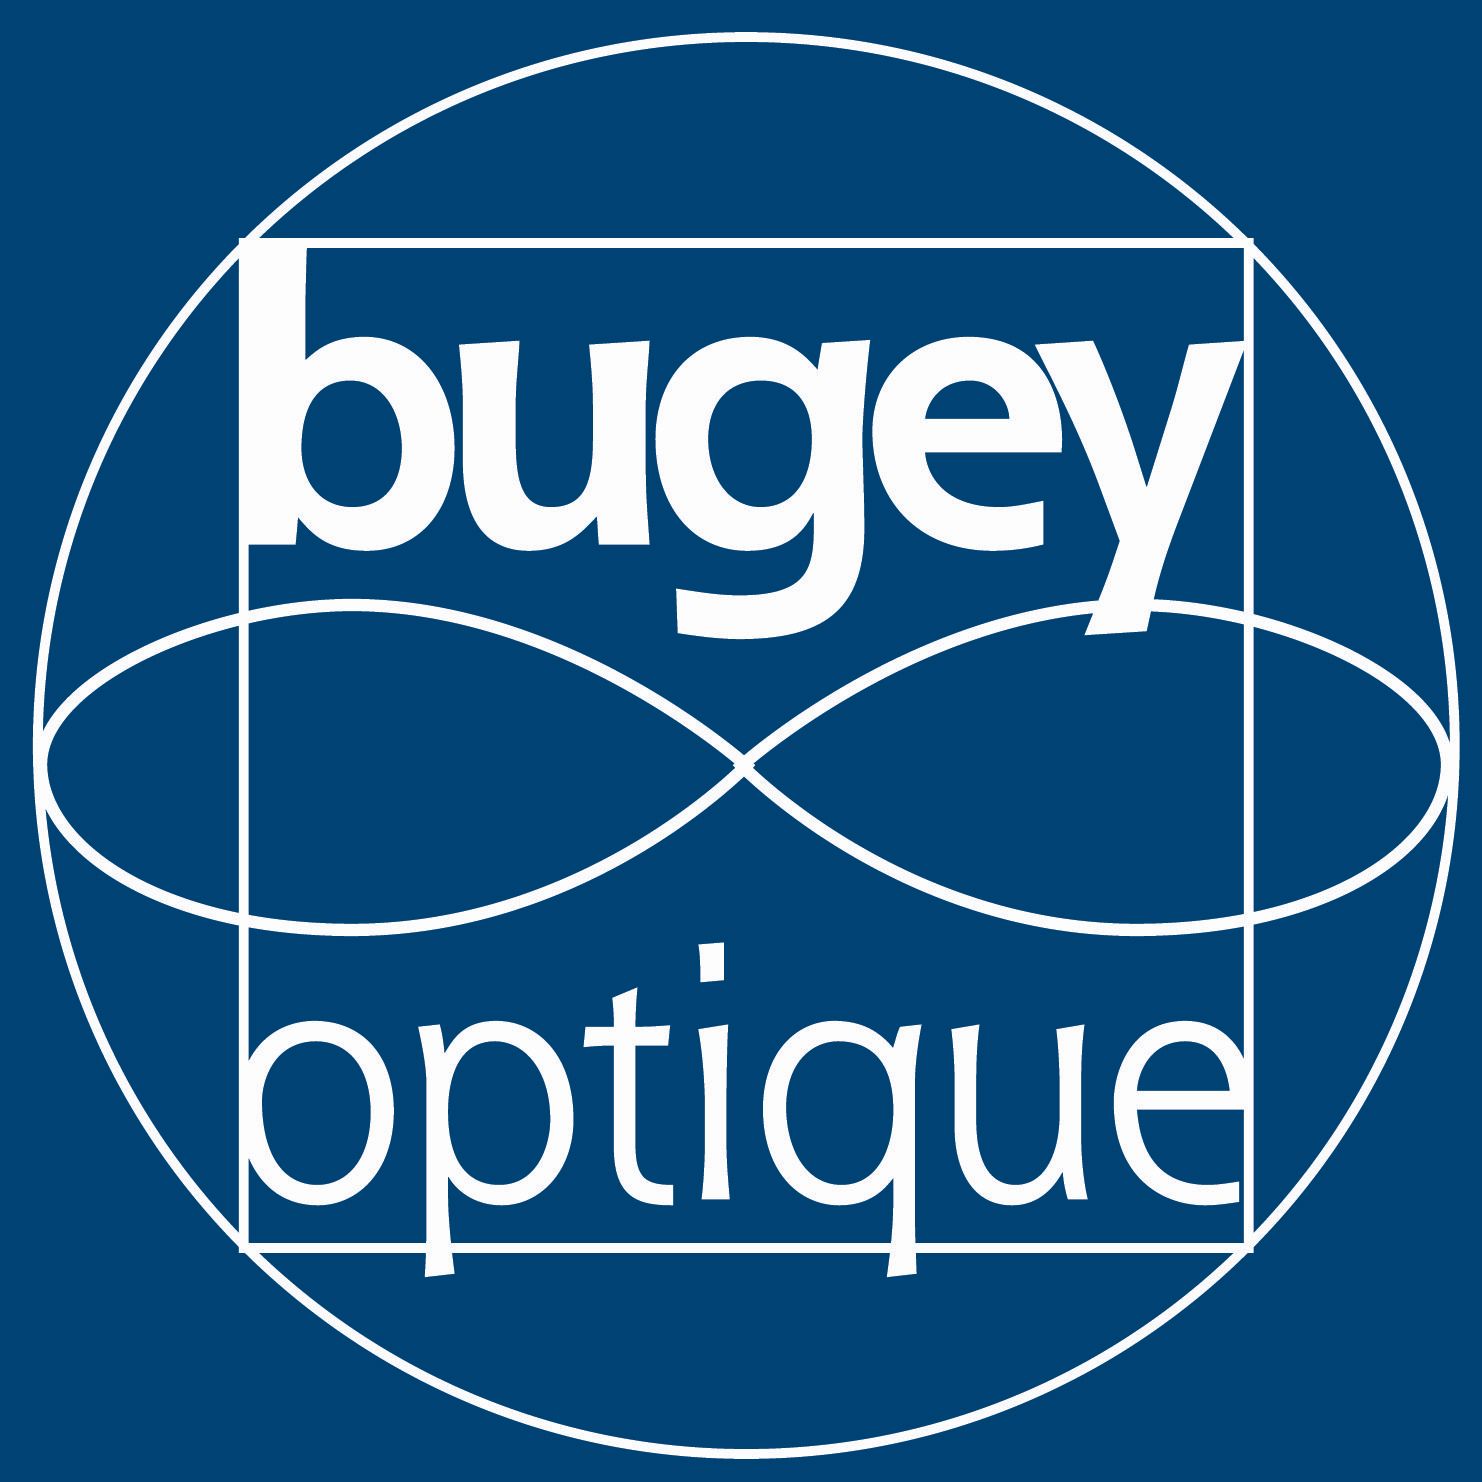 Bugey Optique